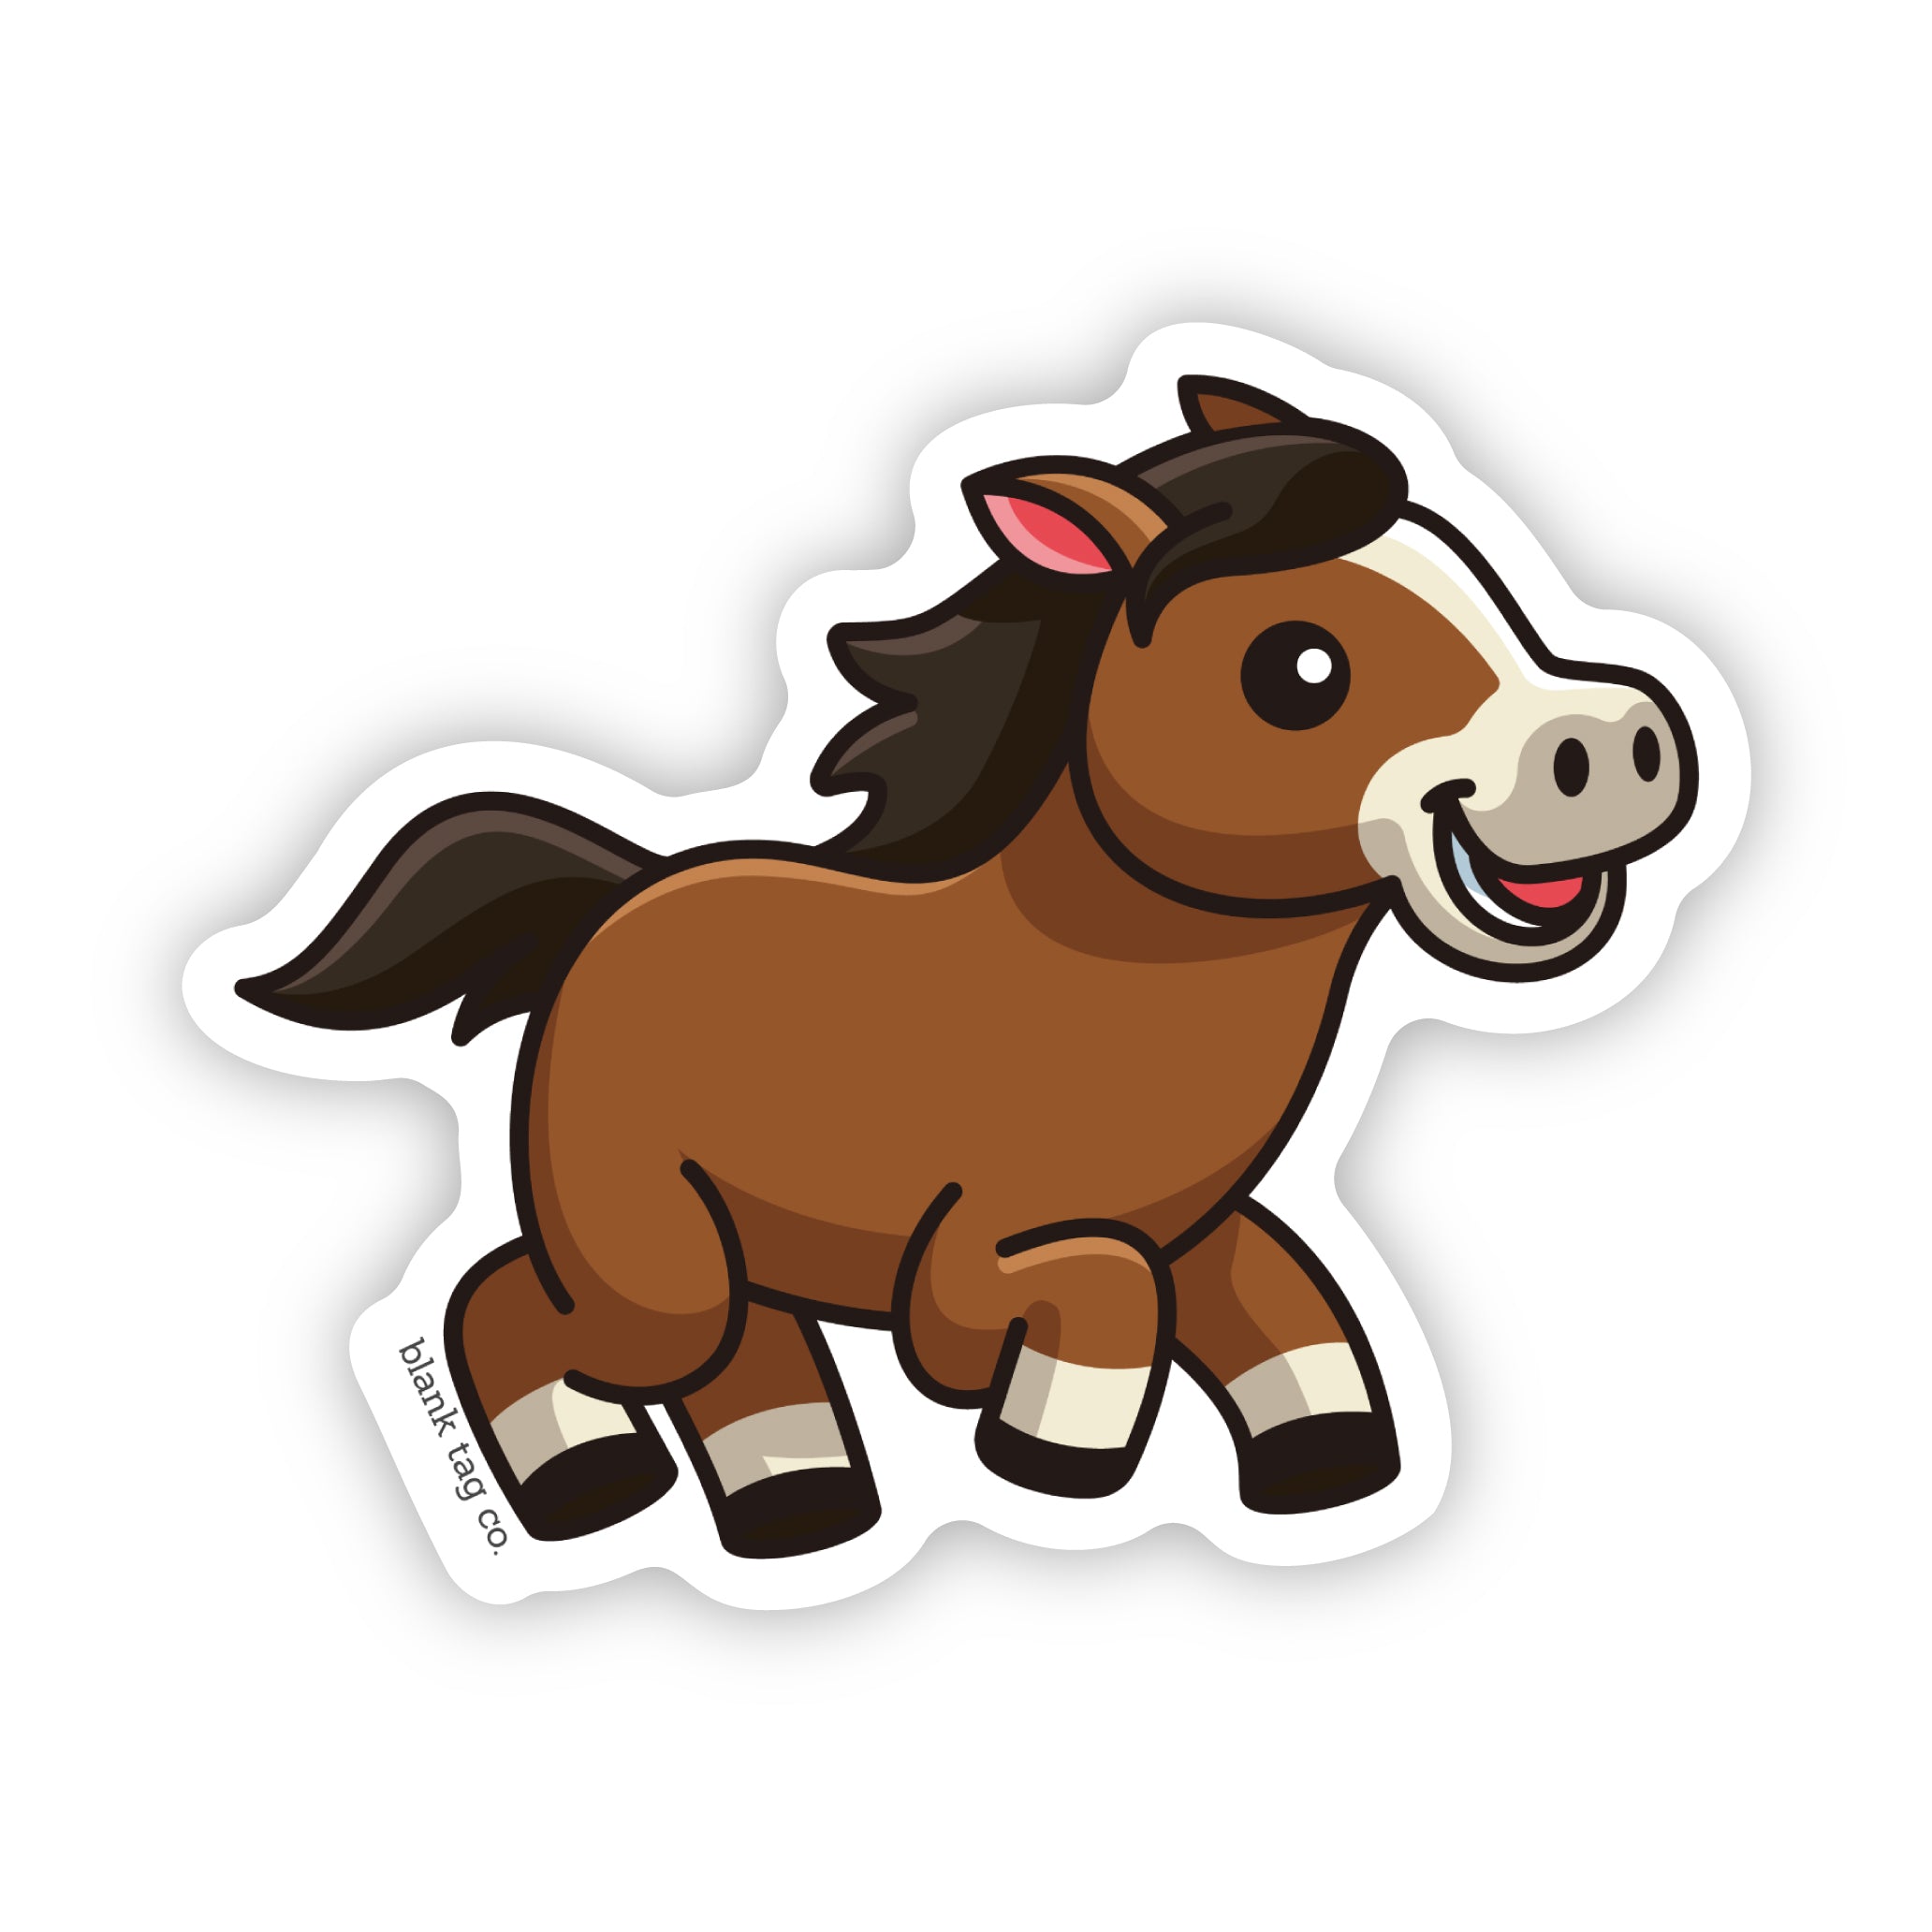 The Horse Sticker